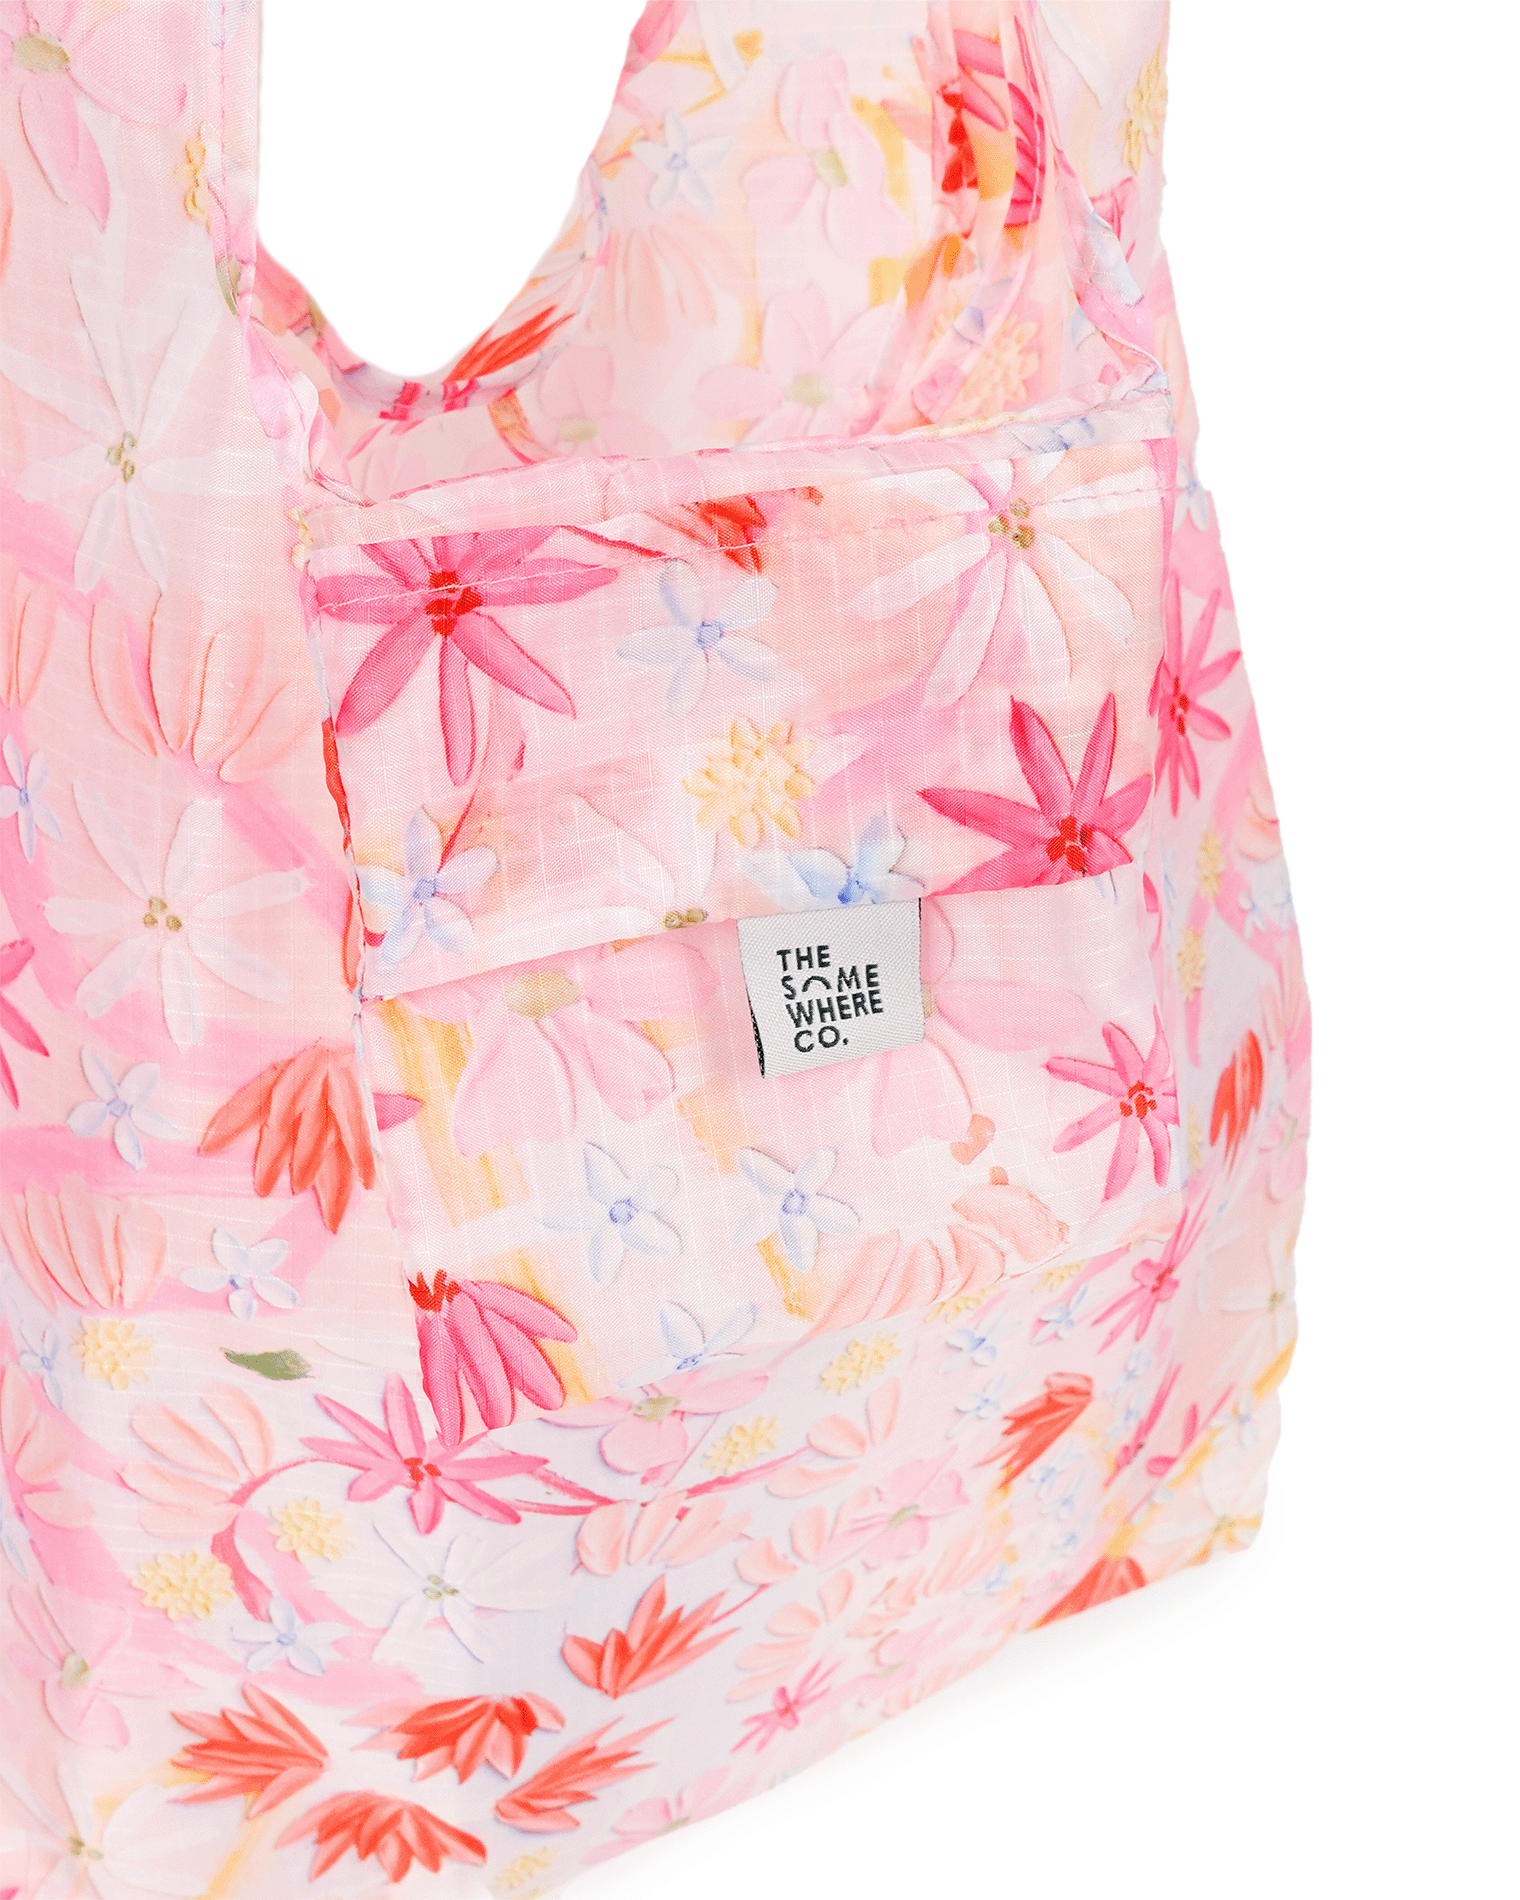 Daisy Chain Reusable Shopping Bag